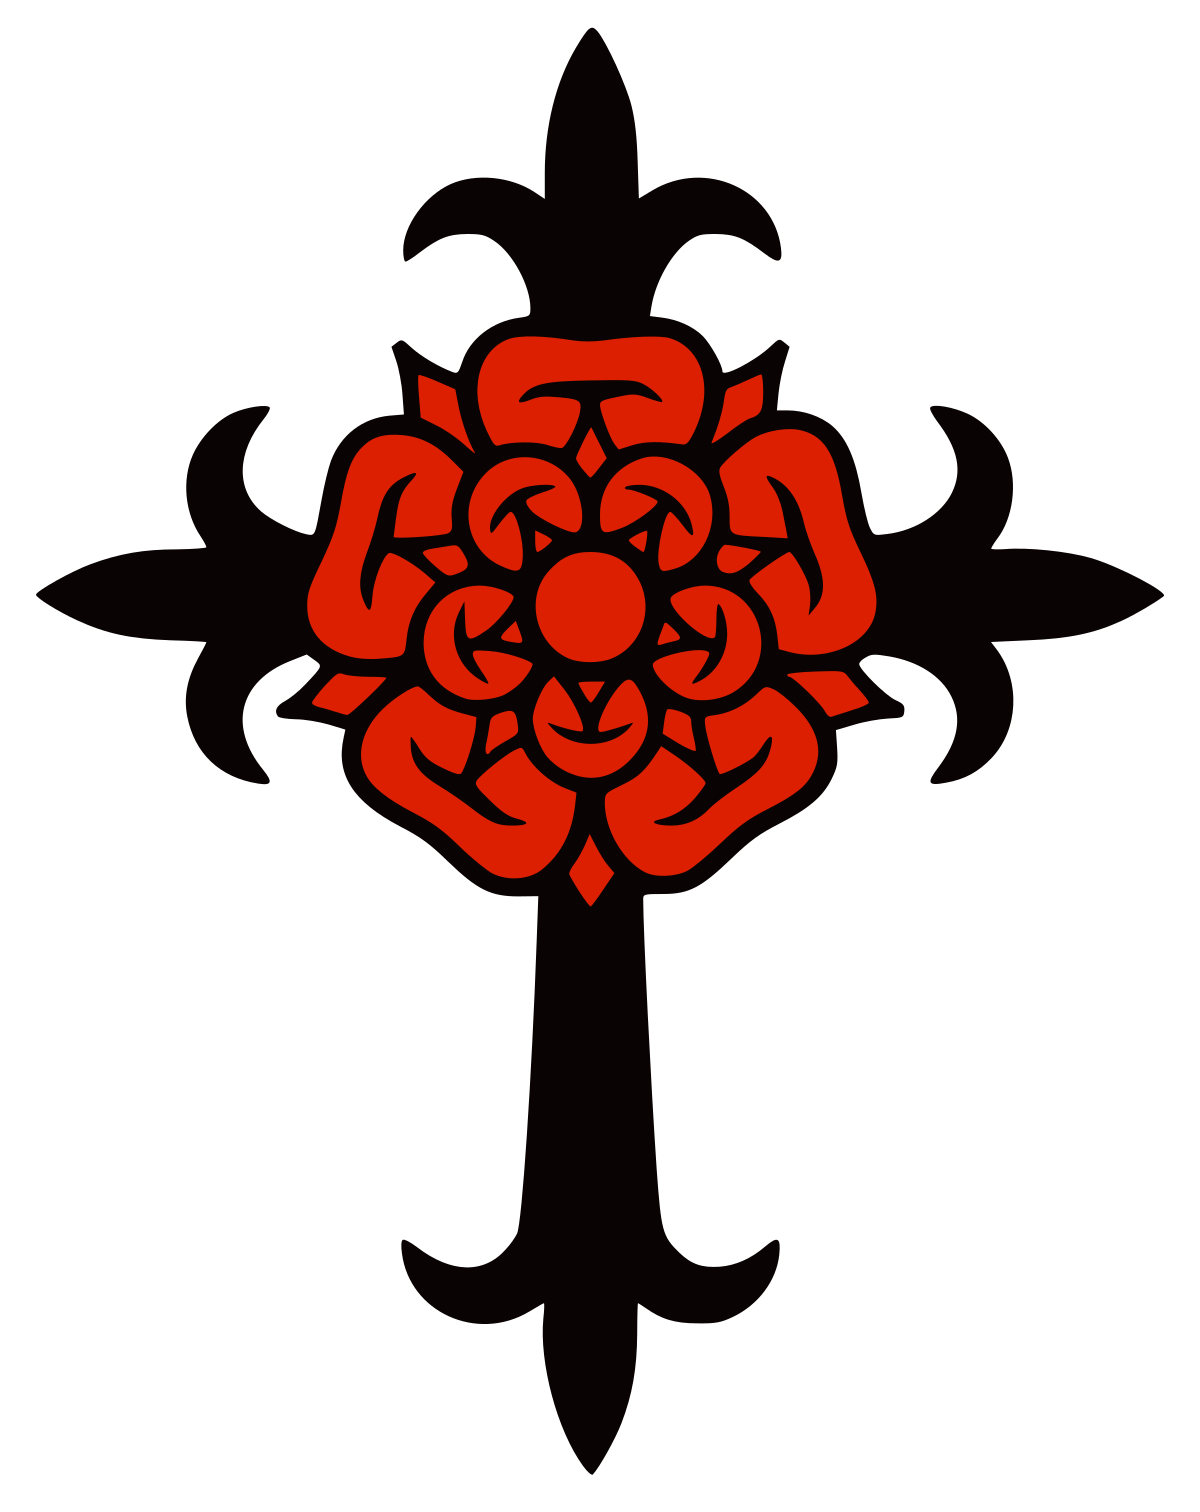 Rose Cross - Wikipedia